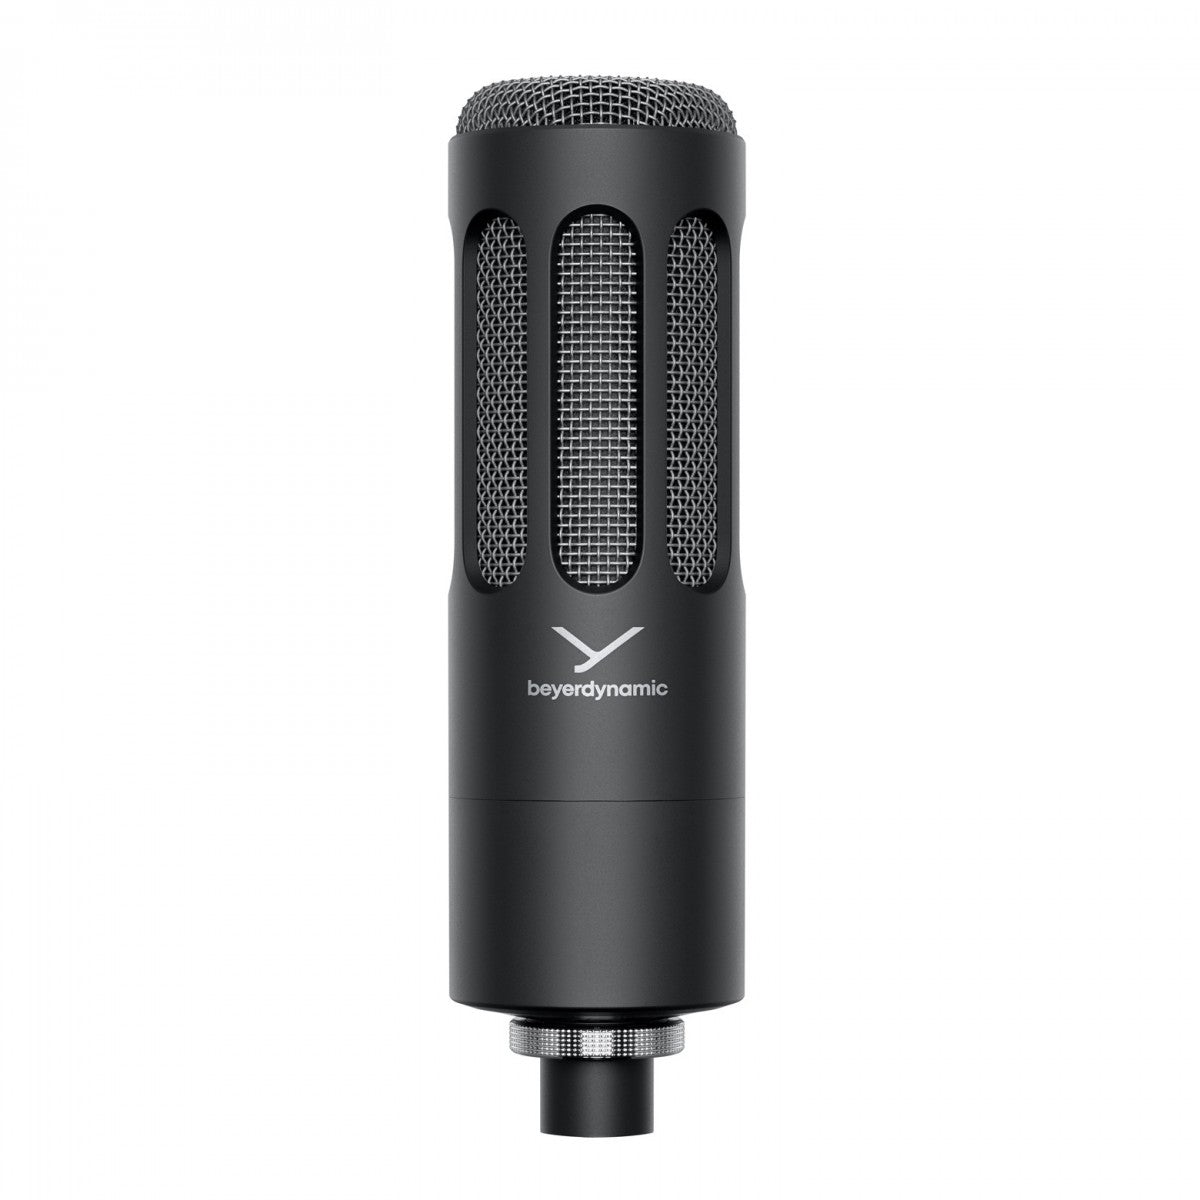 Beyerdynamic M 90 Pro X Broadcast Microphone